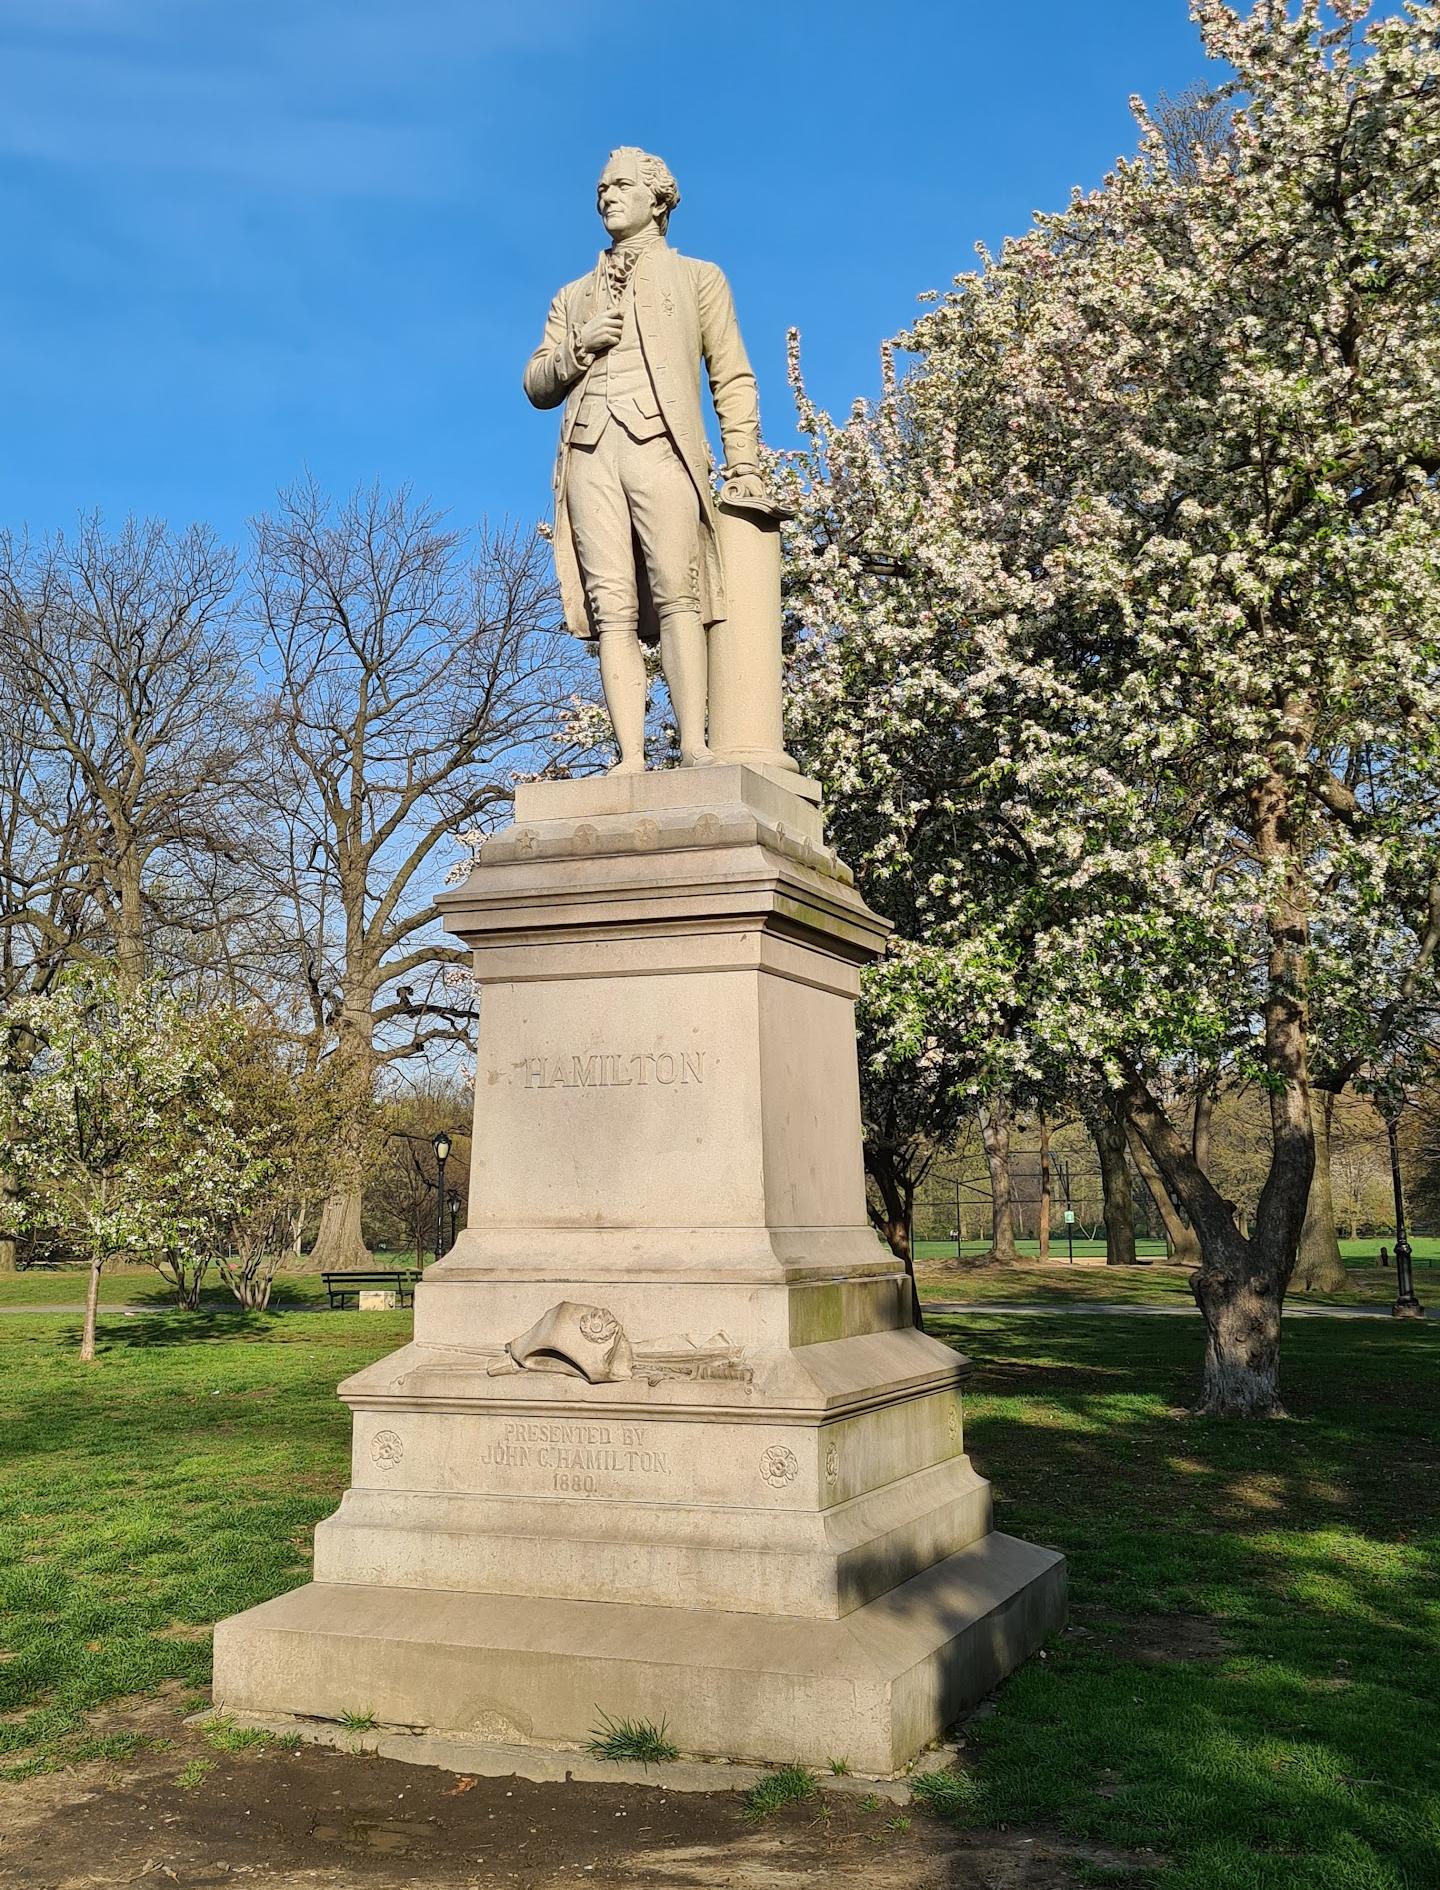 Monumento ad Alexander Hamilton